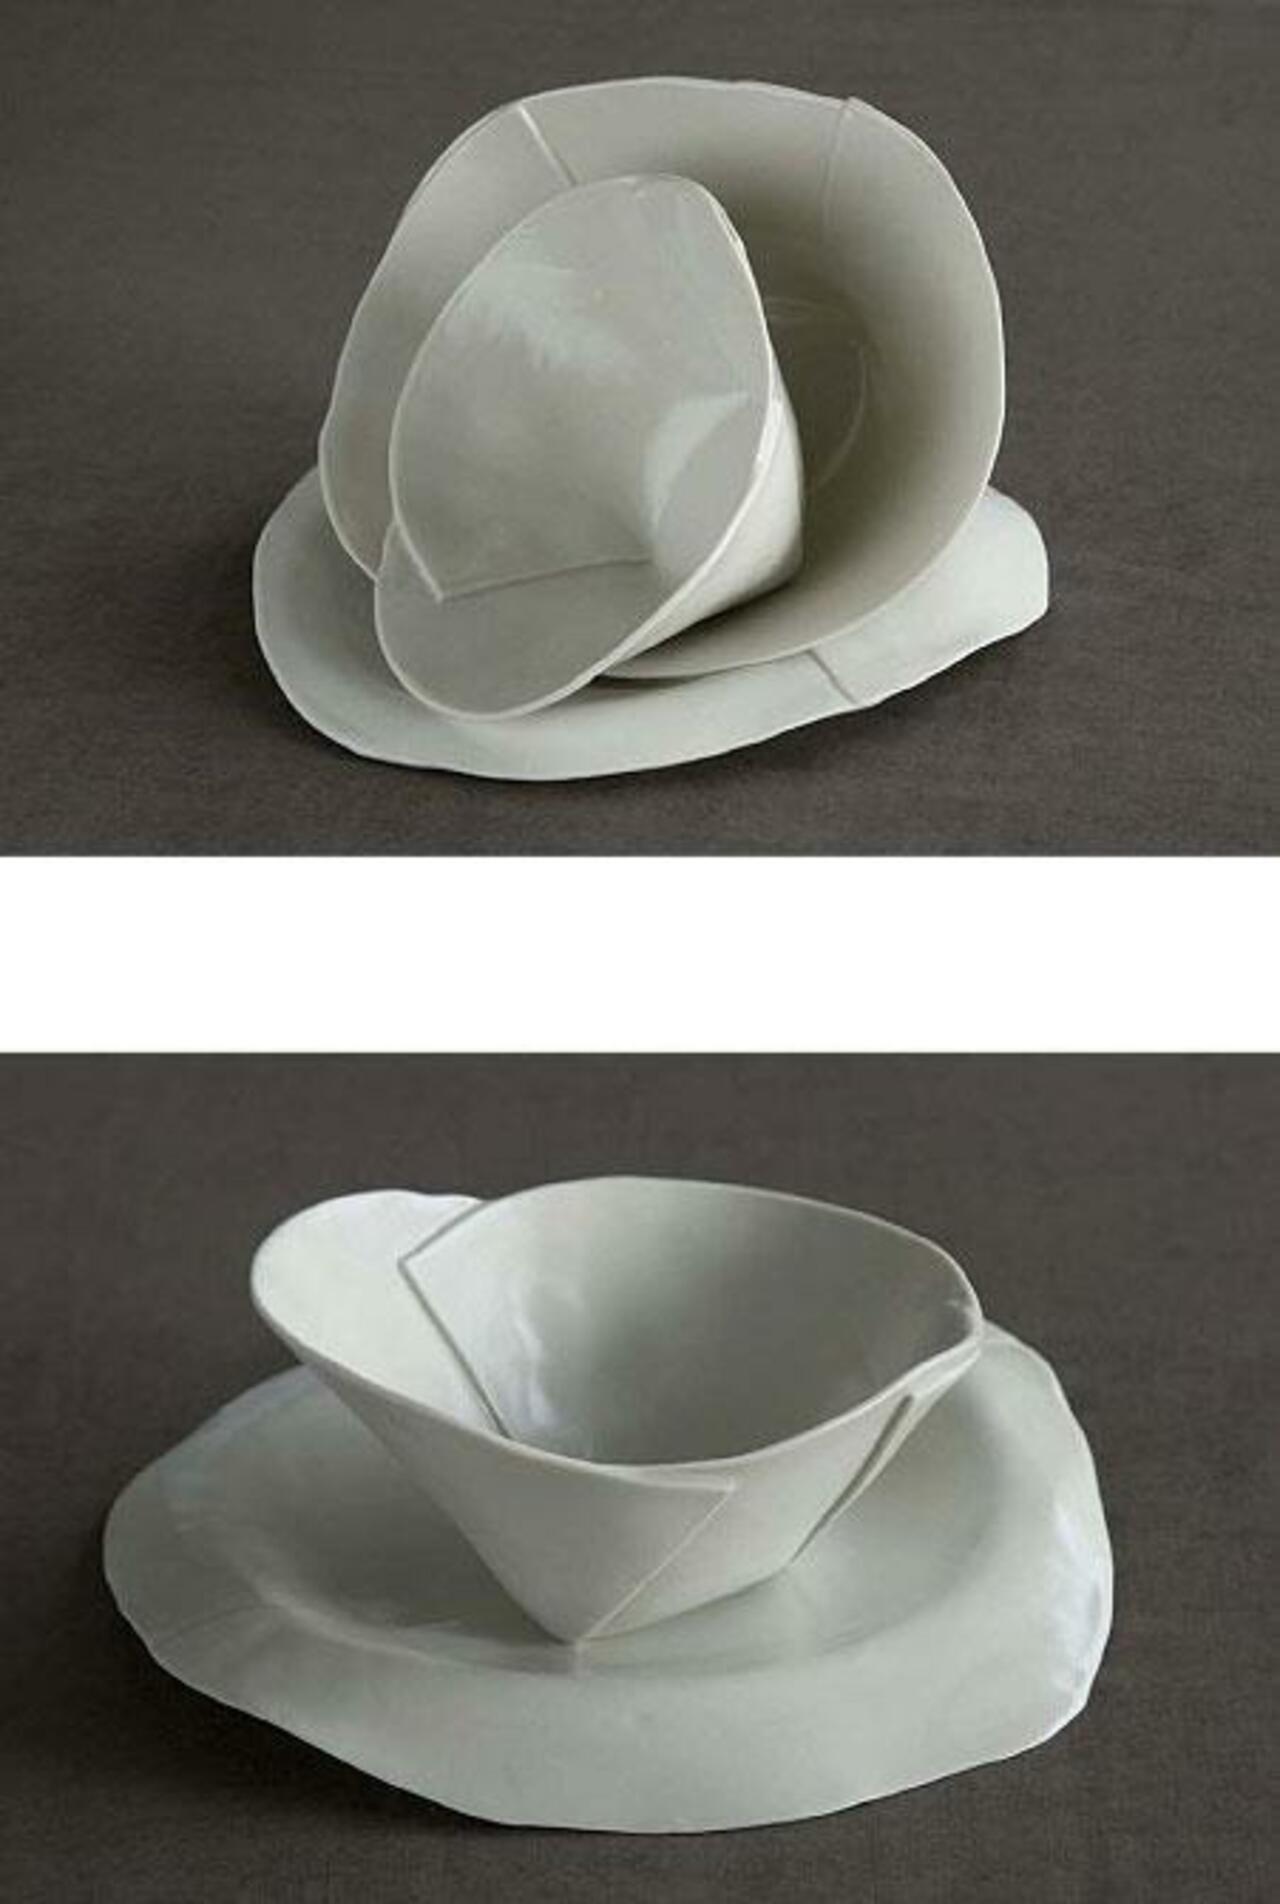 #Art http://bit.ly/1EEyXz8 ceramics http://t.co/rhxzBSdl4L